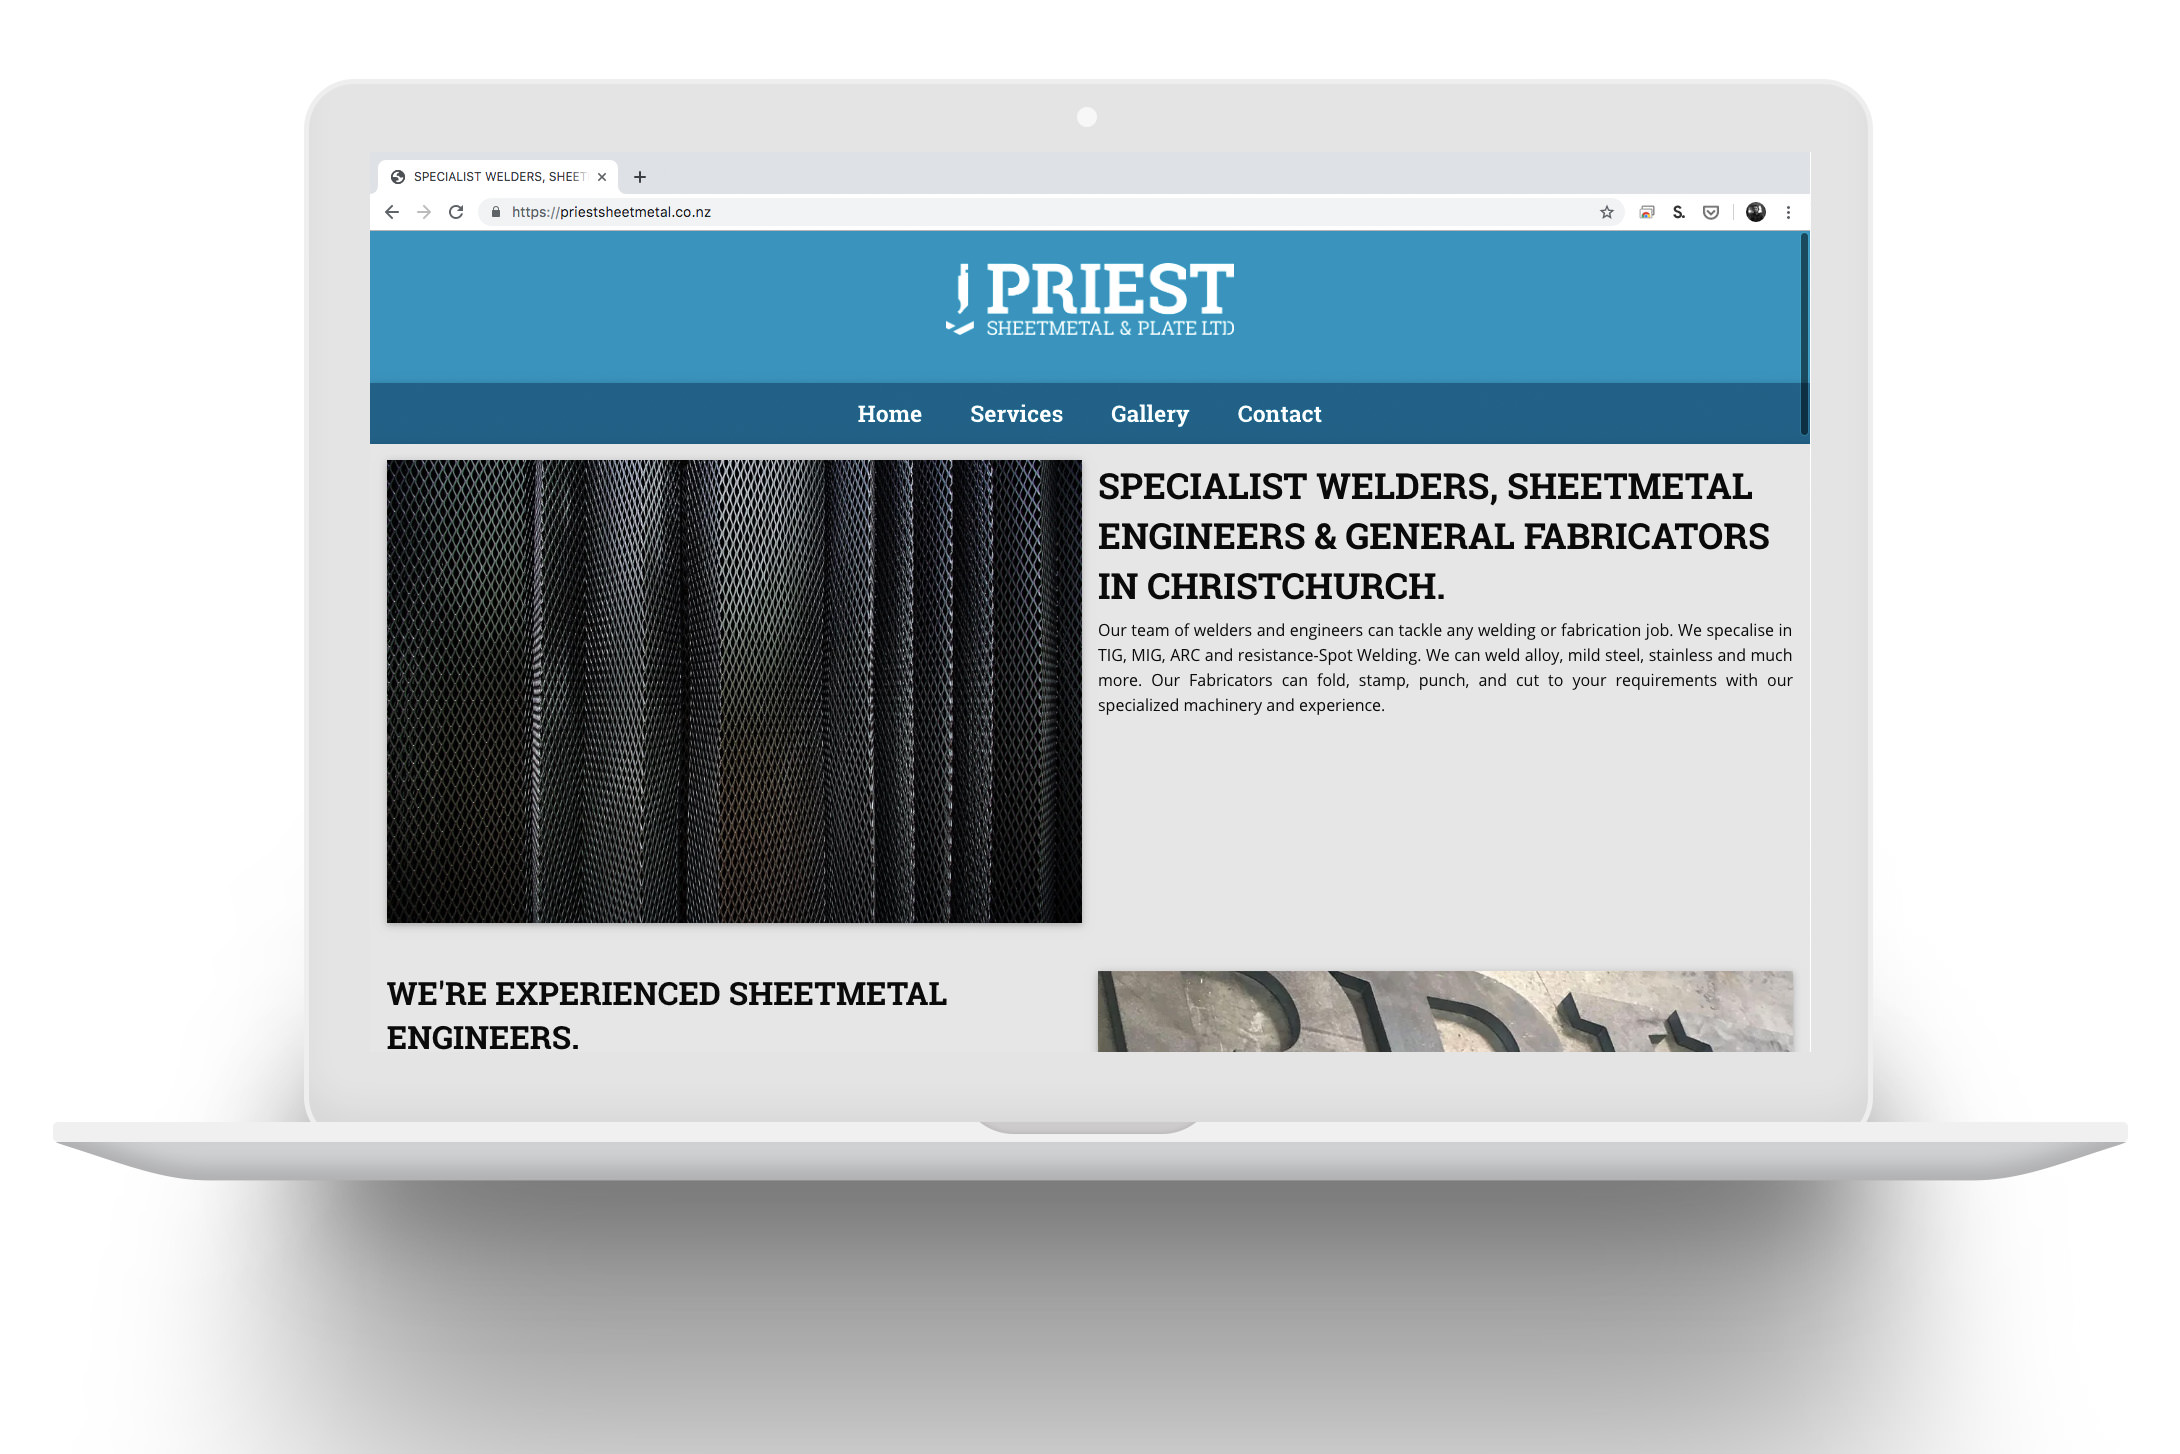 riley bathurst design priest sheetmetal website update for mid 2019